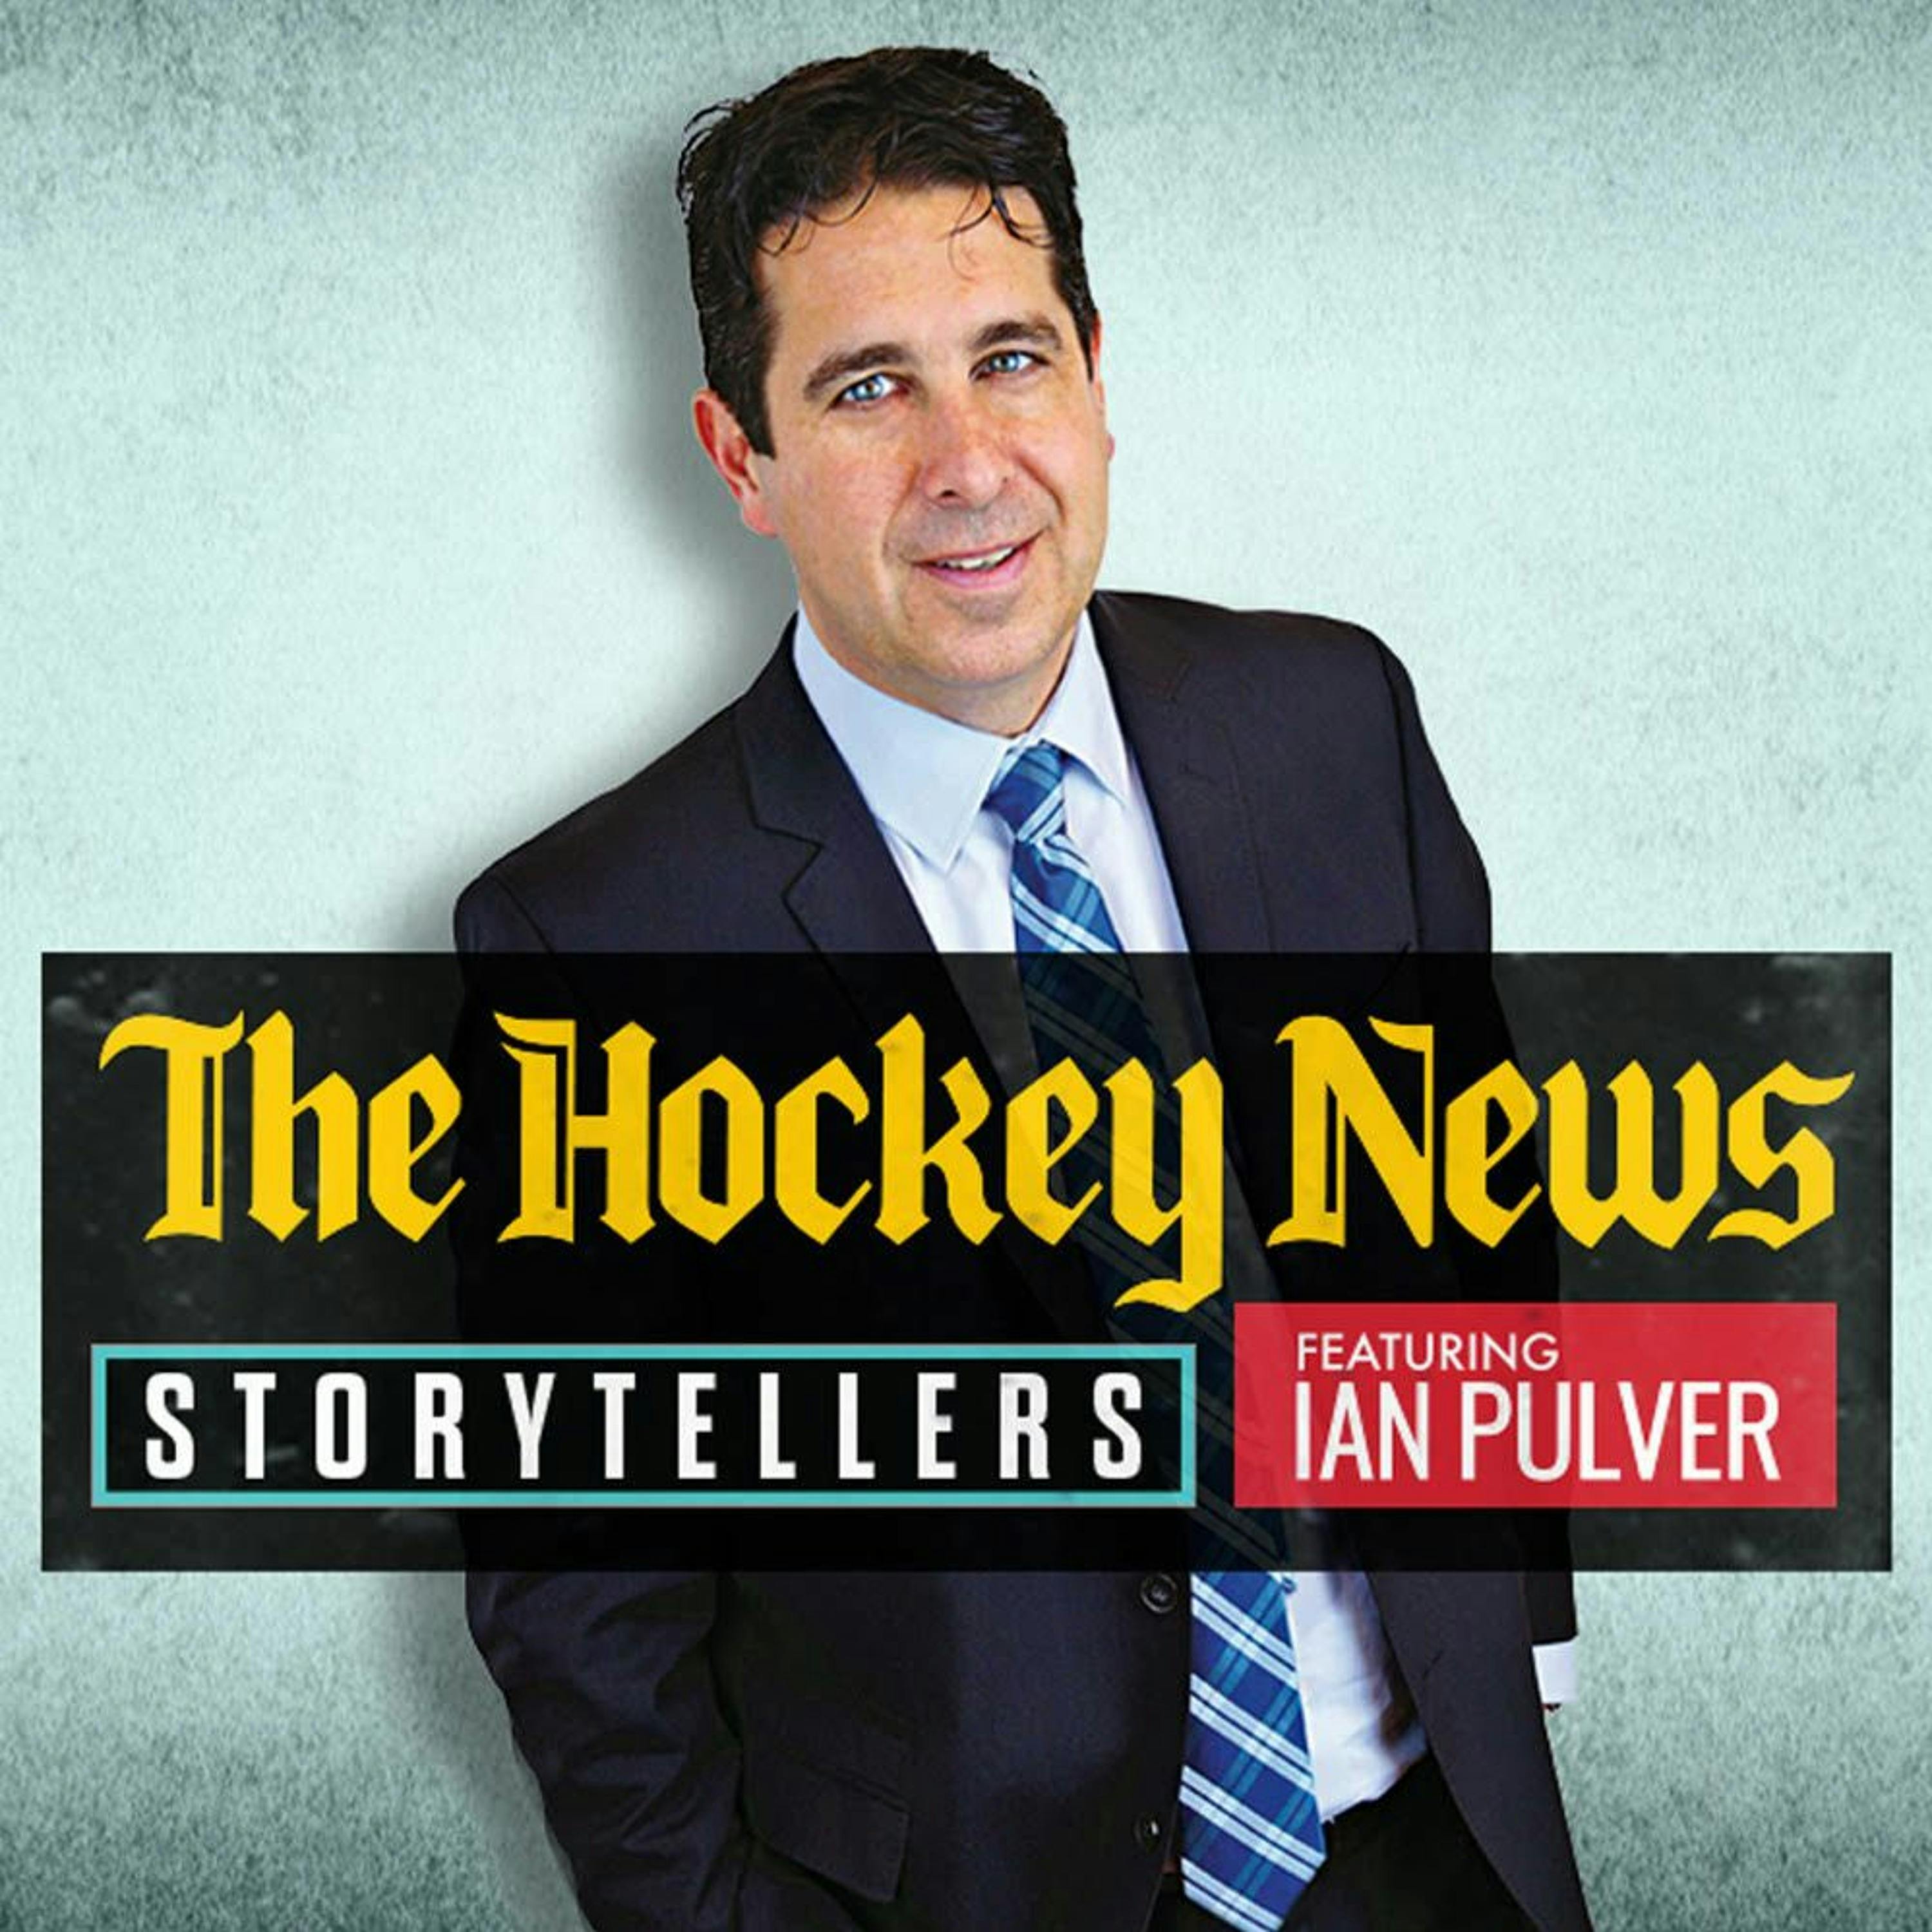 Storytellers Featuring Ian Pulver: Dan Craig, Hockey's Ice King